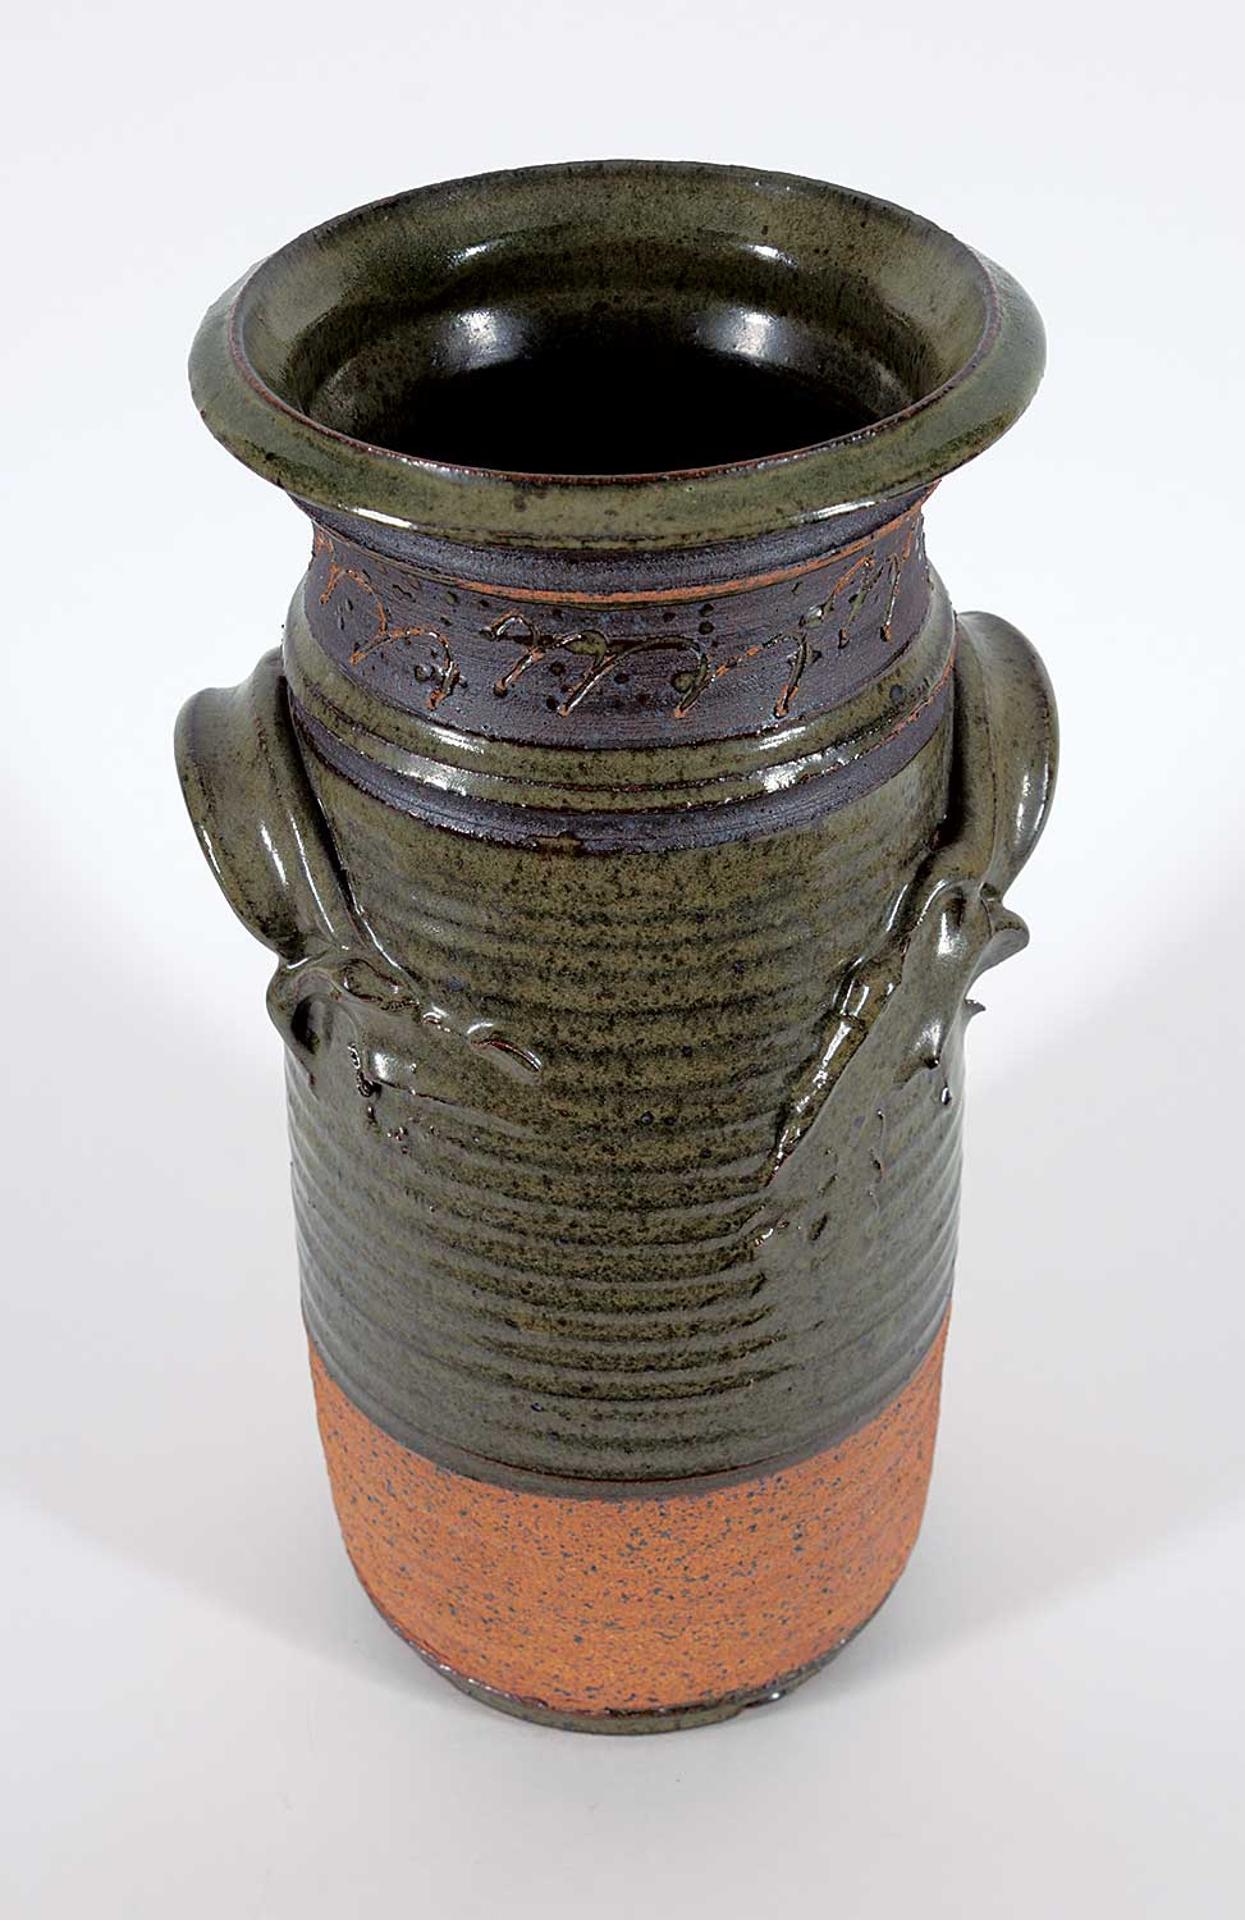 Neil James Liske (1936) - Untitled - Green and Brown Vase with Handles